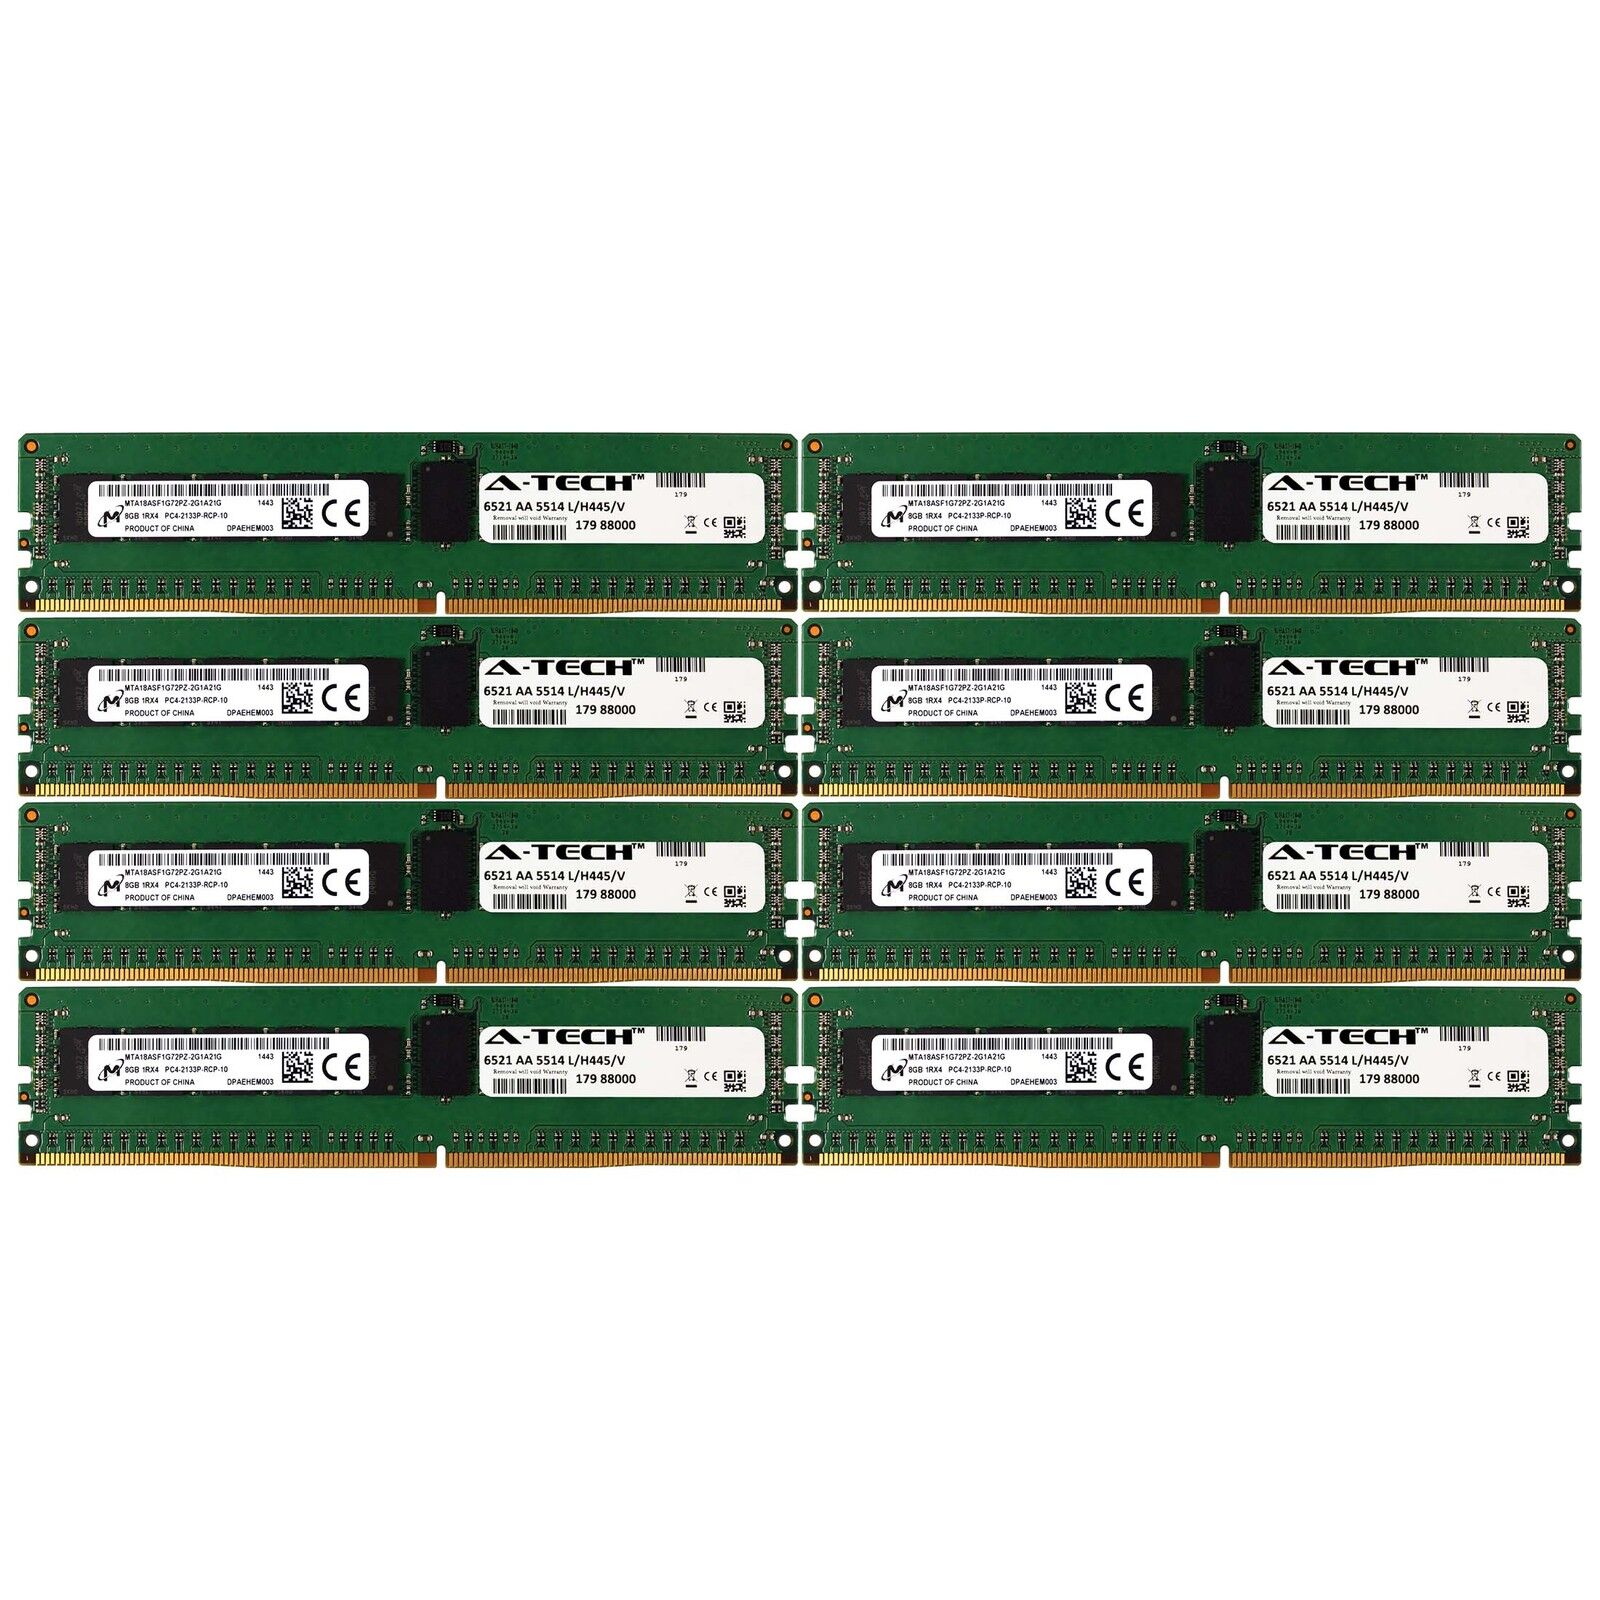 DDR4 2133MHz Micron 64GB Kit 8x 8GB HP ProLiant WS460c BL460c WS460c Memory RAM